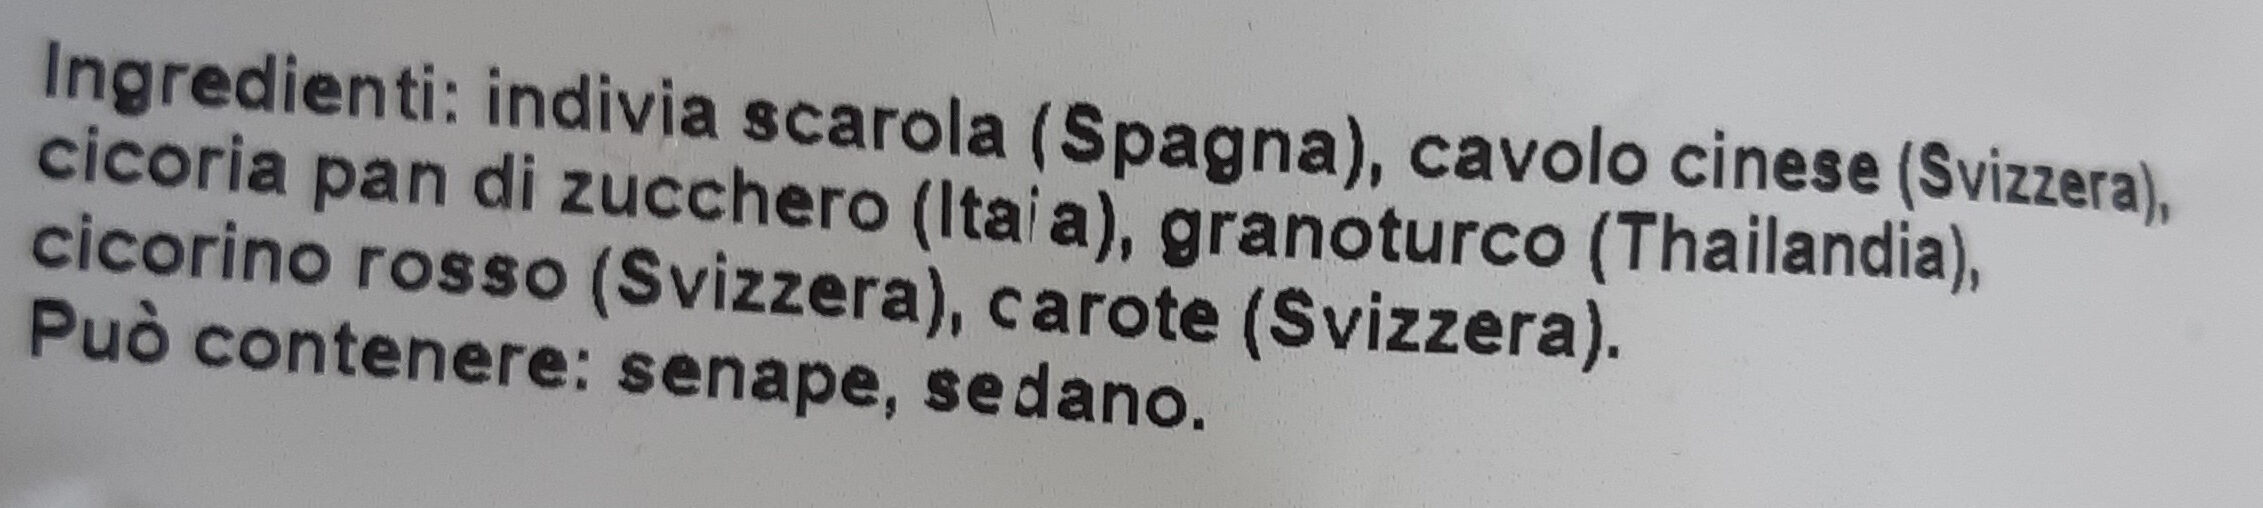 Rustico salad - Ingredienti - it